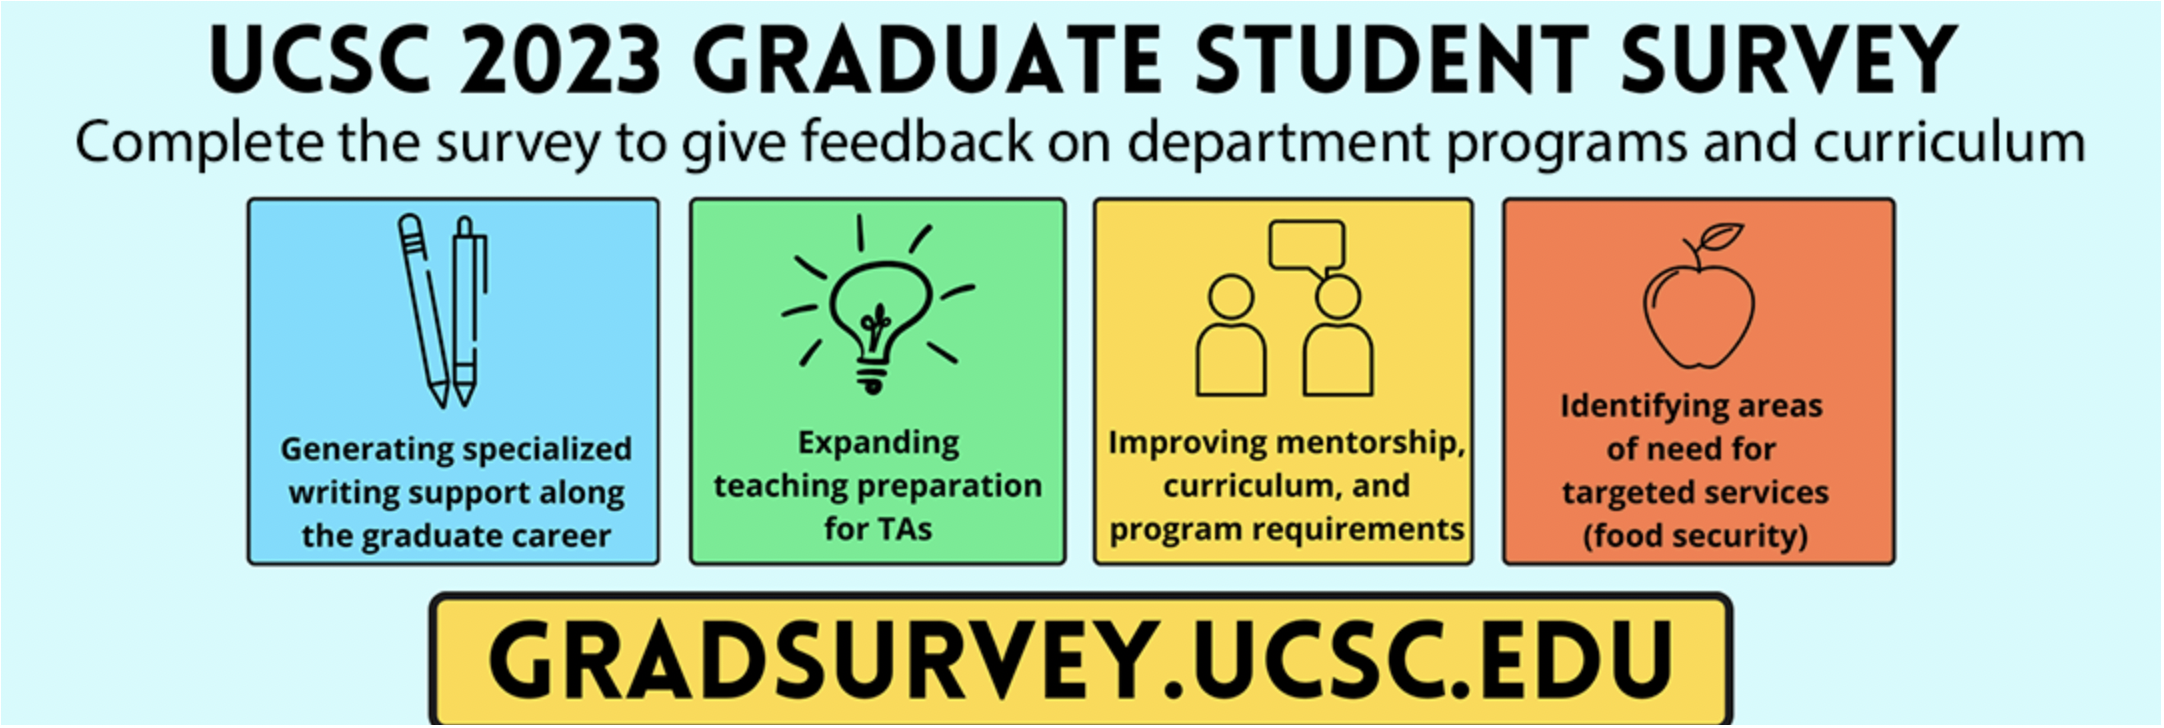 grad-student-survey-banner.png